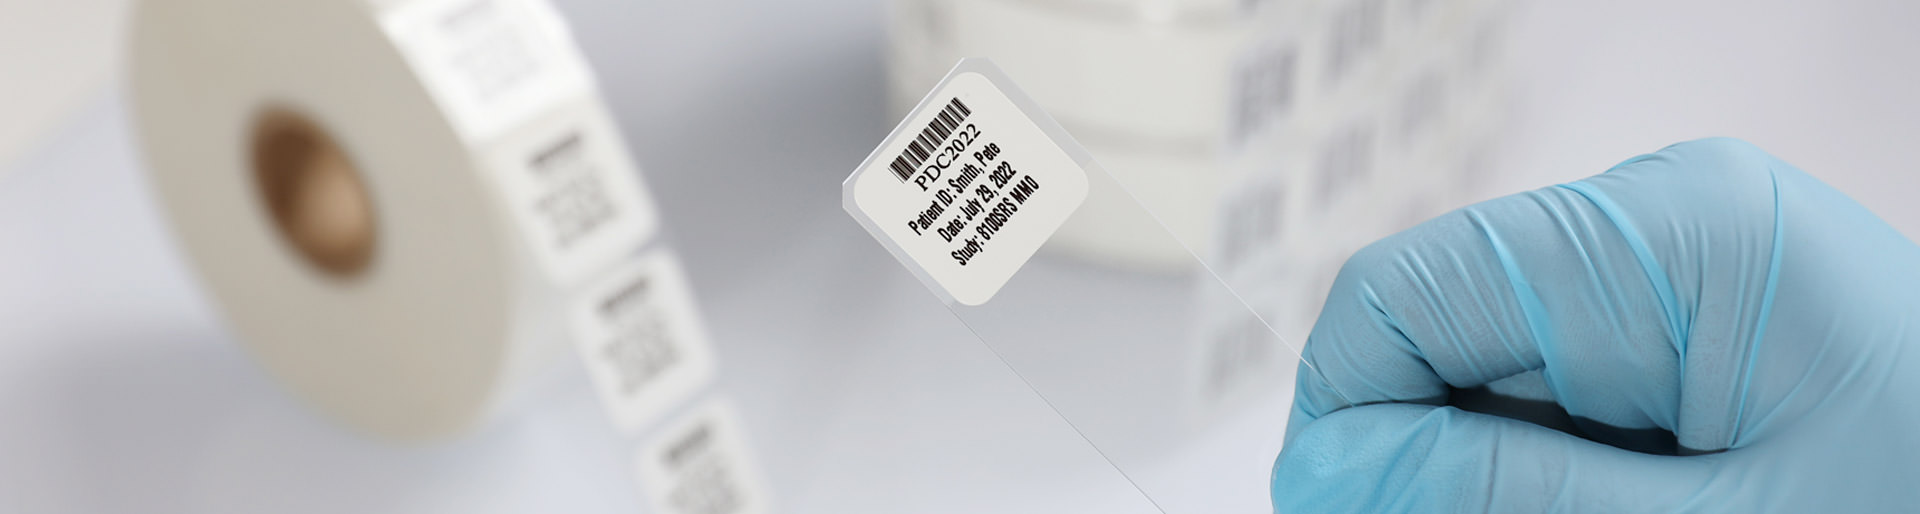 Microscope Slide Labels